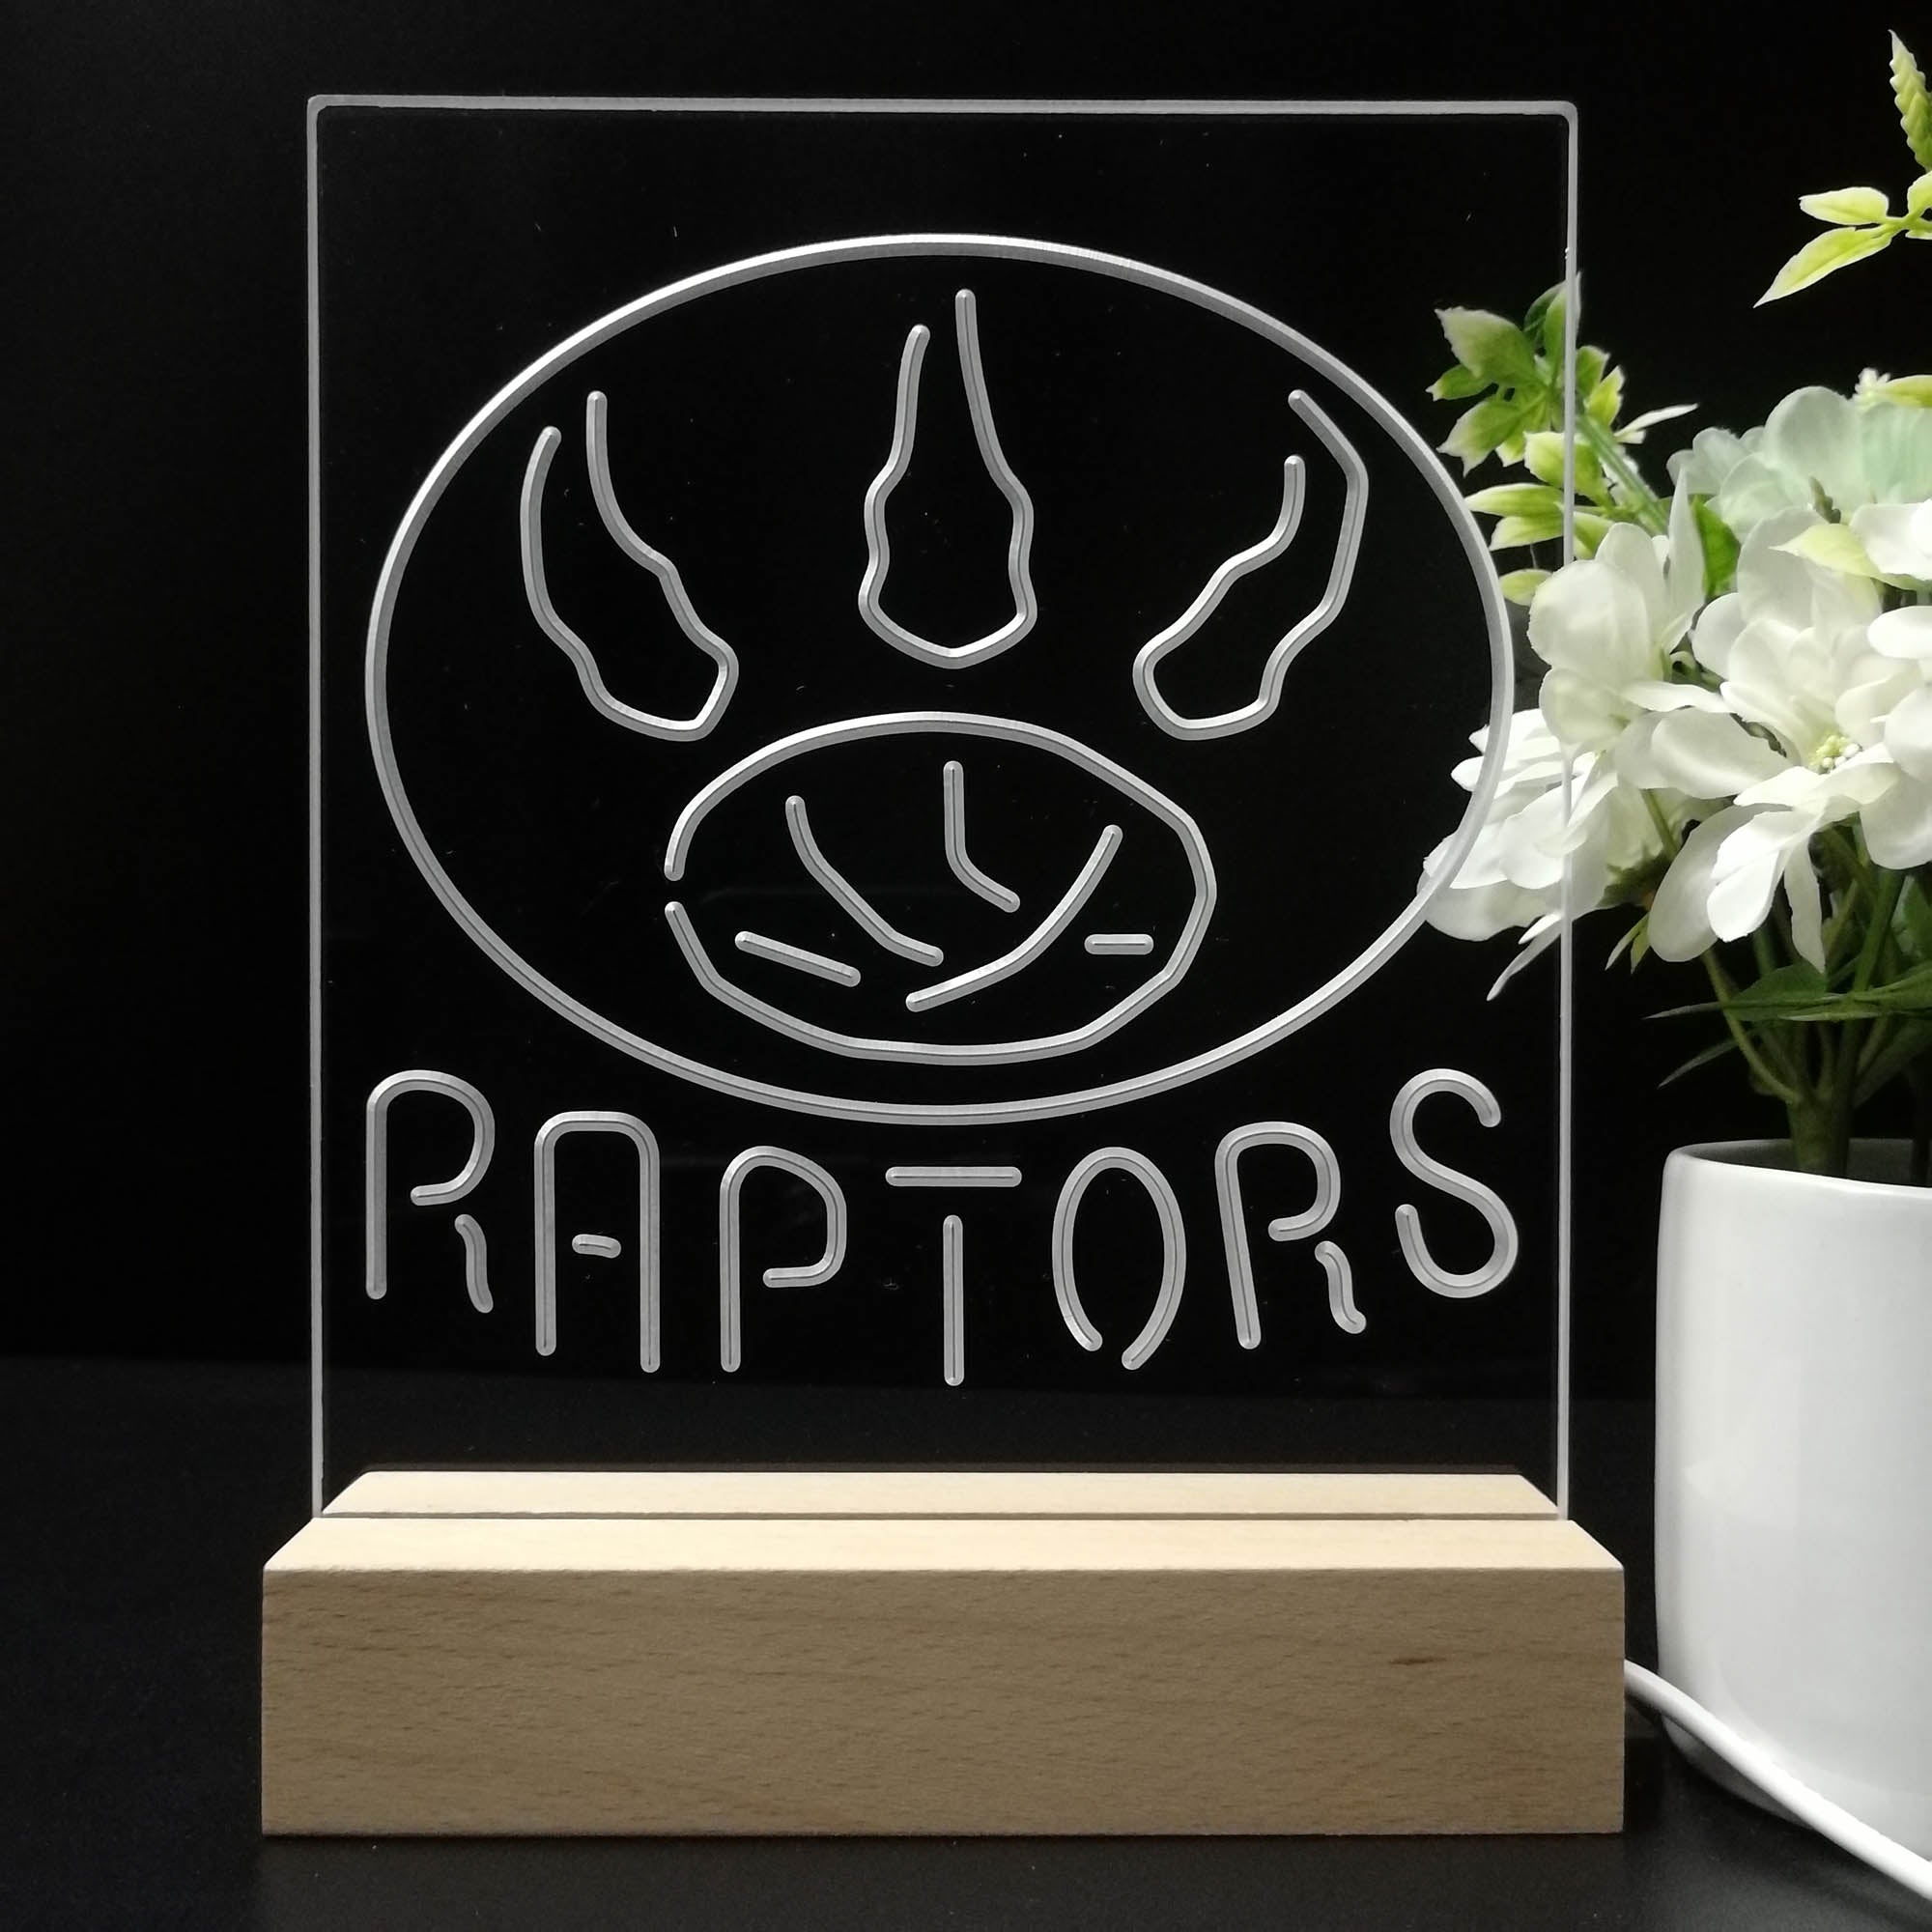 Toronto Raptors Sport Team Night Lamp 3D Illusion Lamp